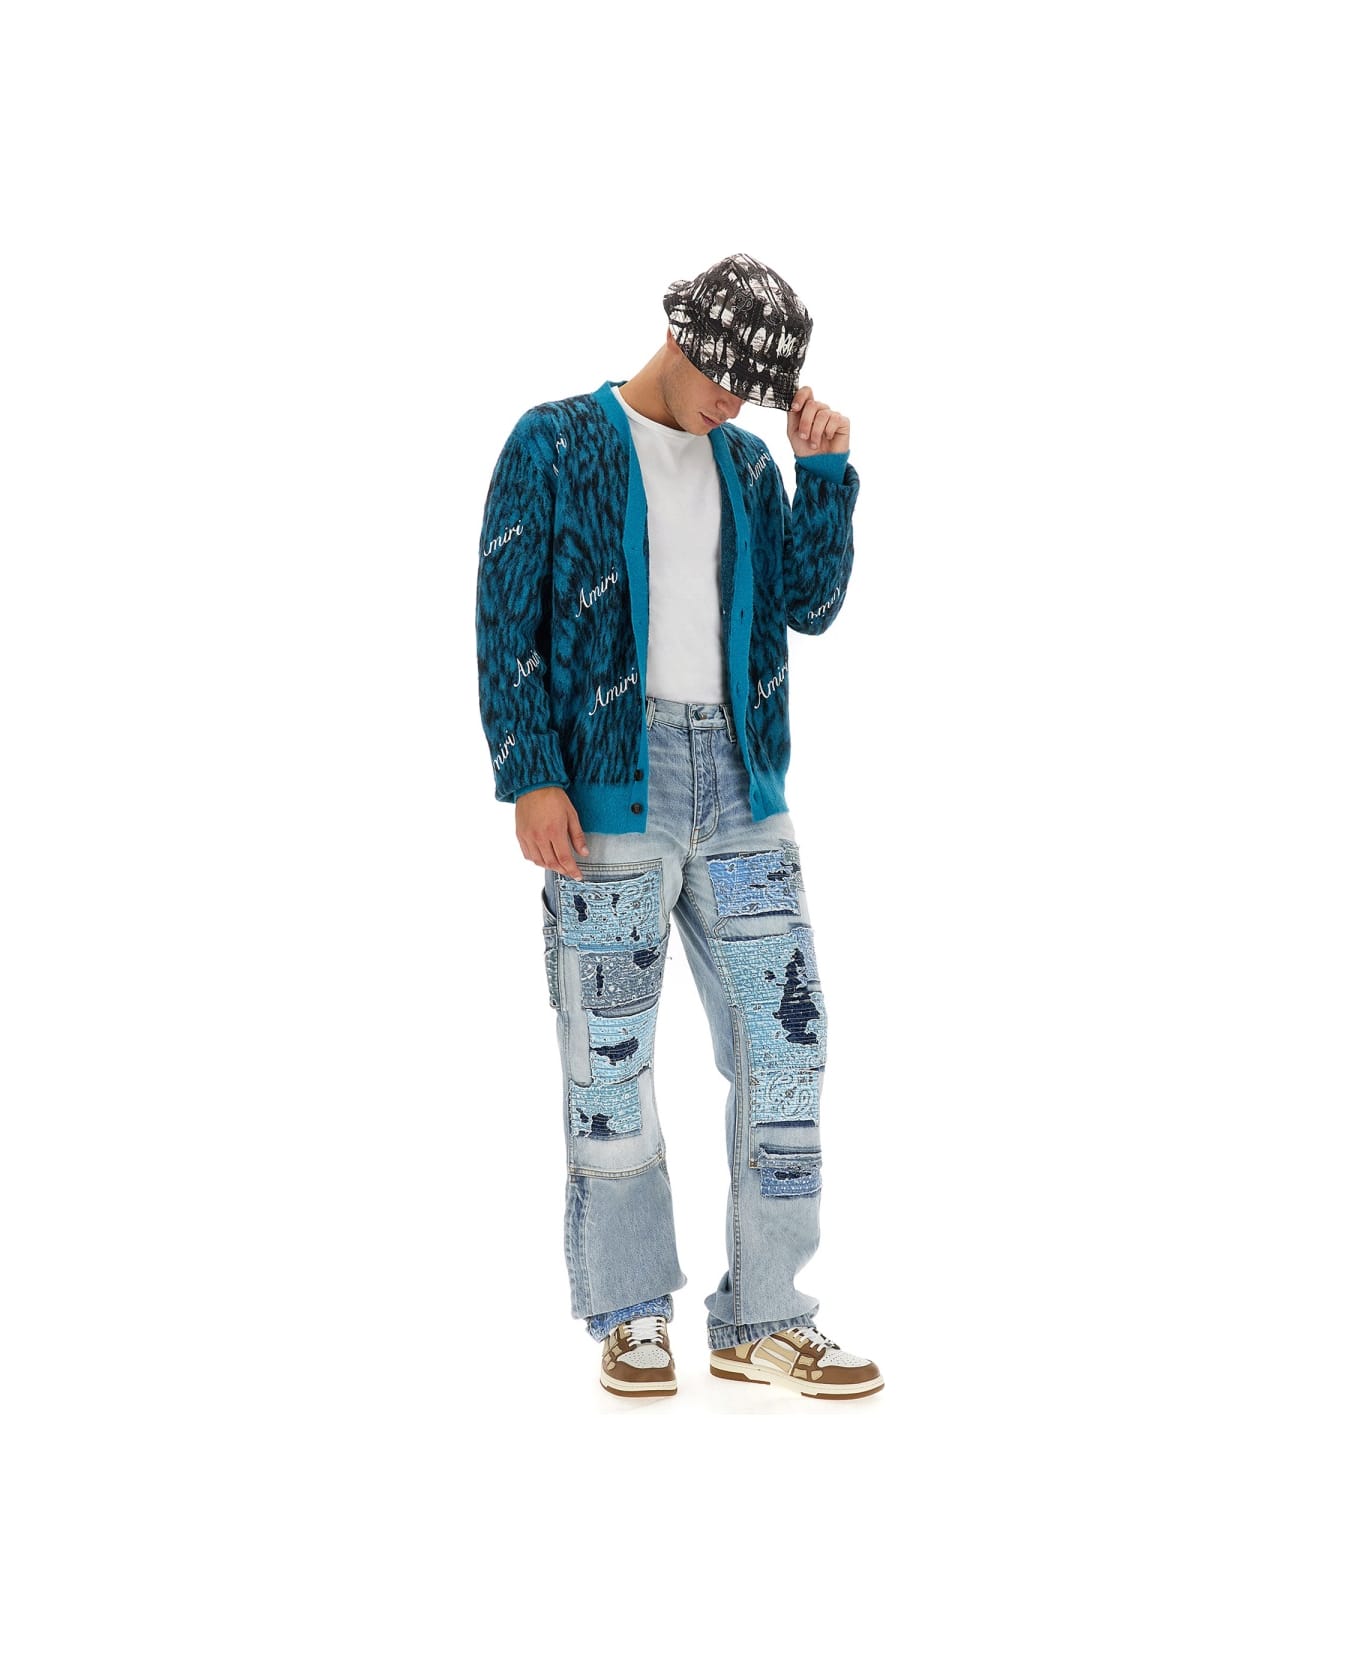 AMIRI Carpenter Jeans - STONEINDIGO